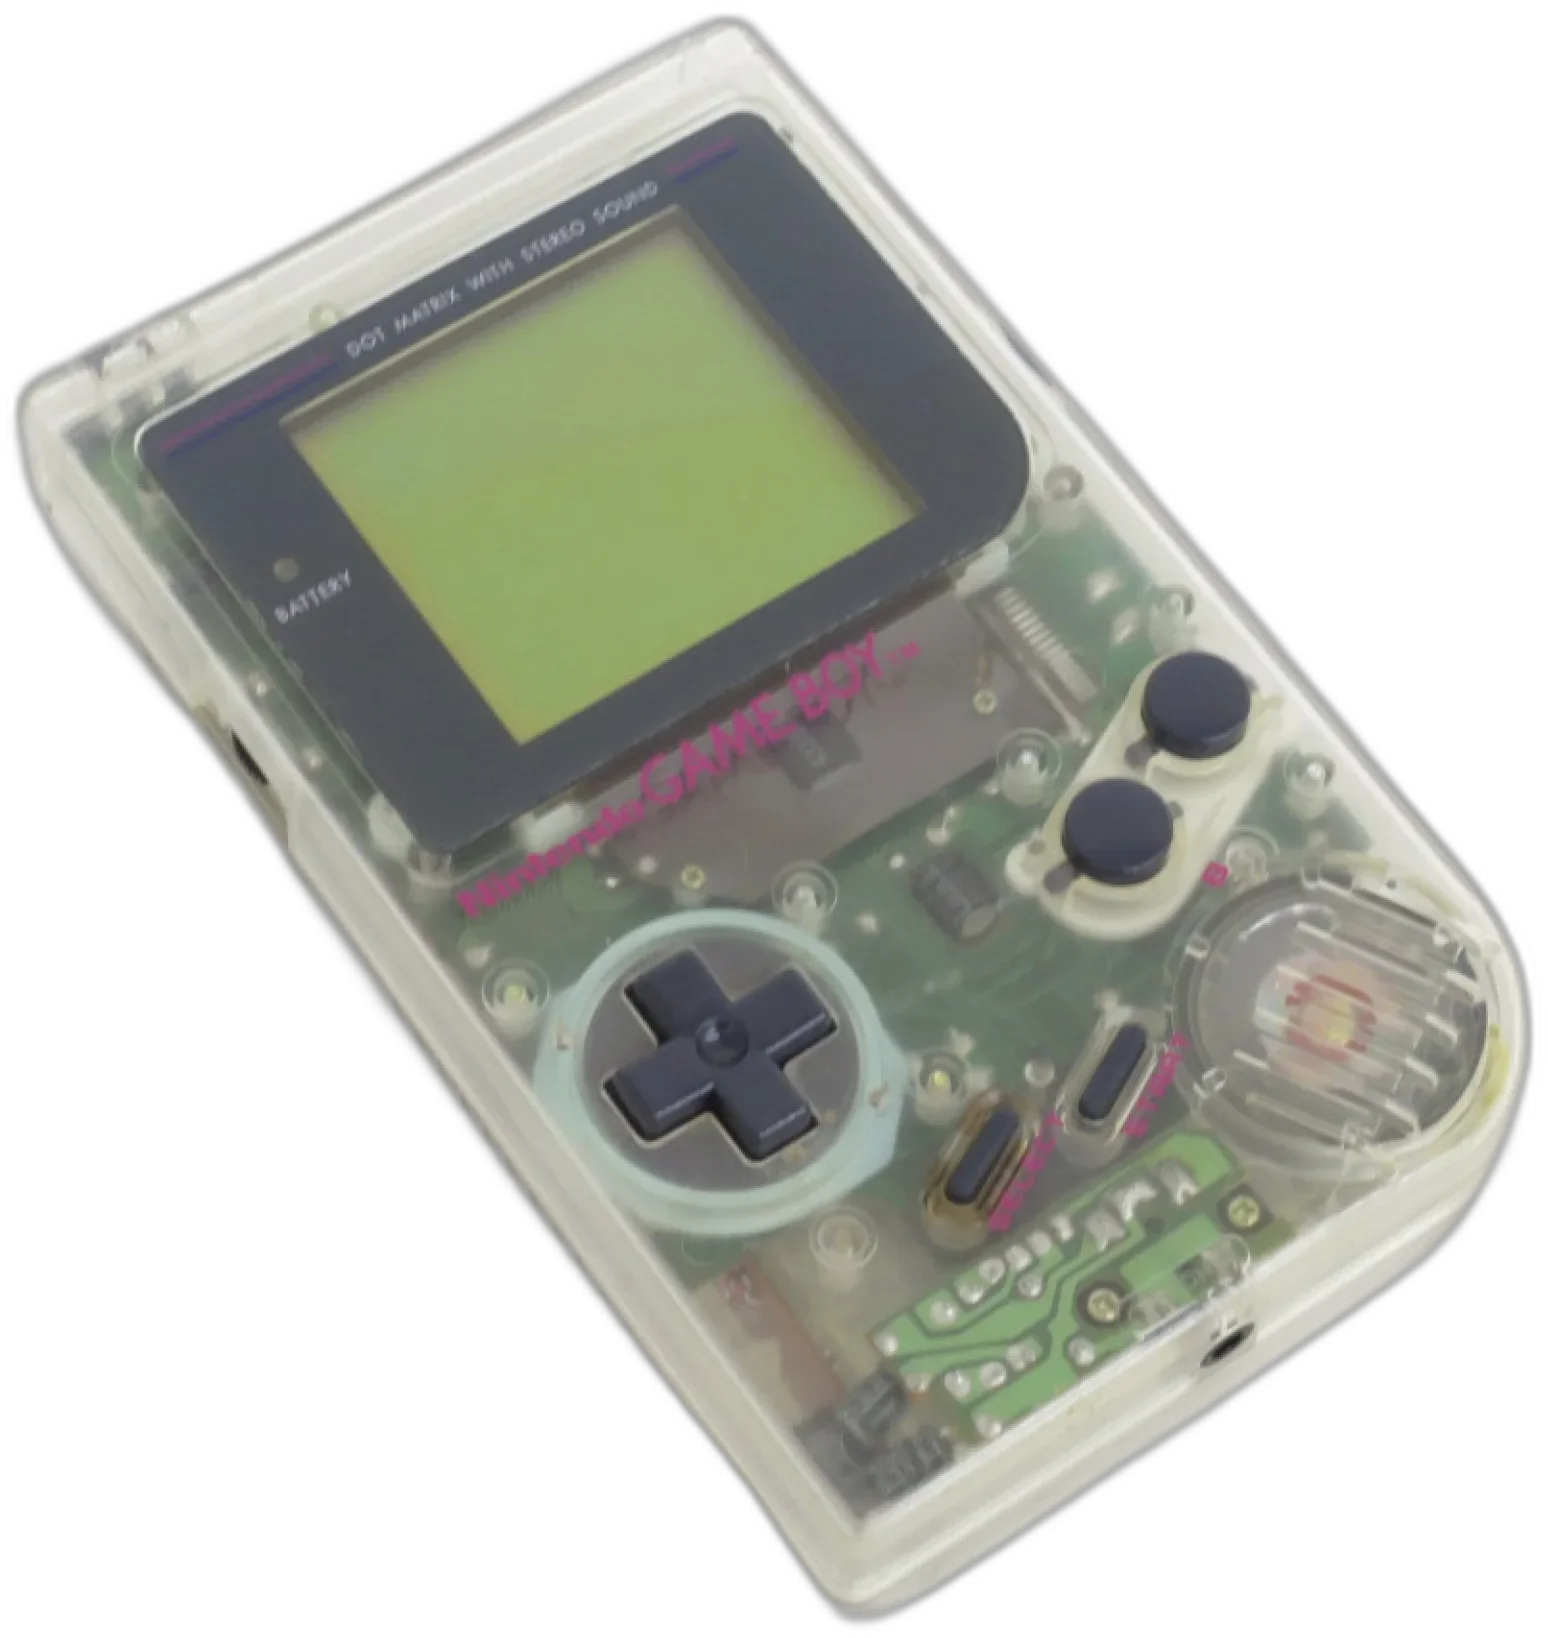  Nintendo Game Boy High Tech Transparent Console [JP]